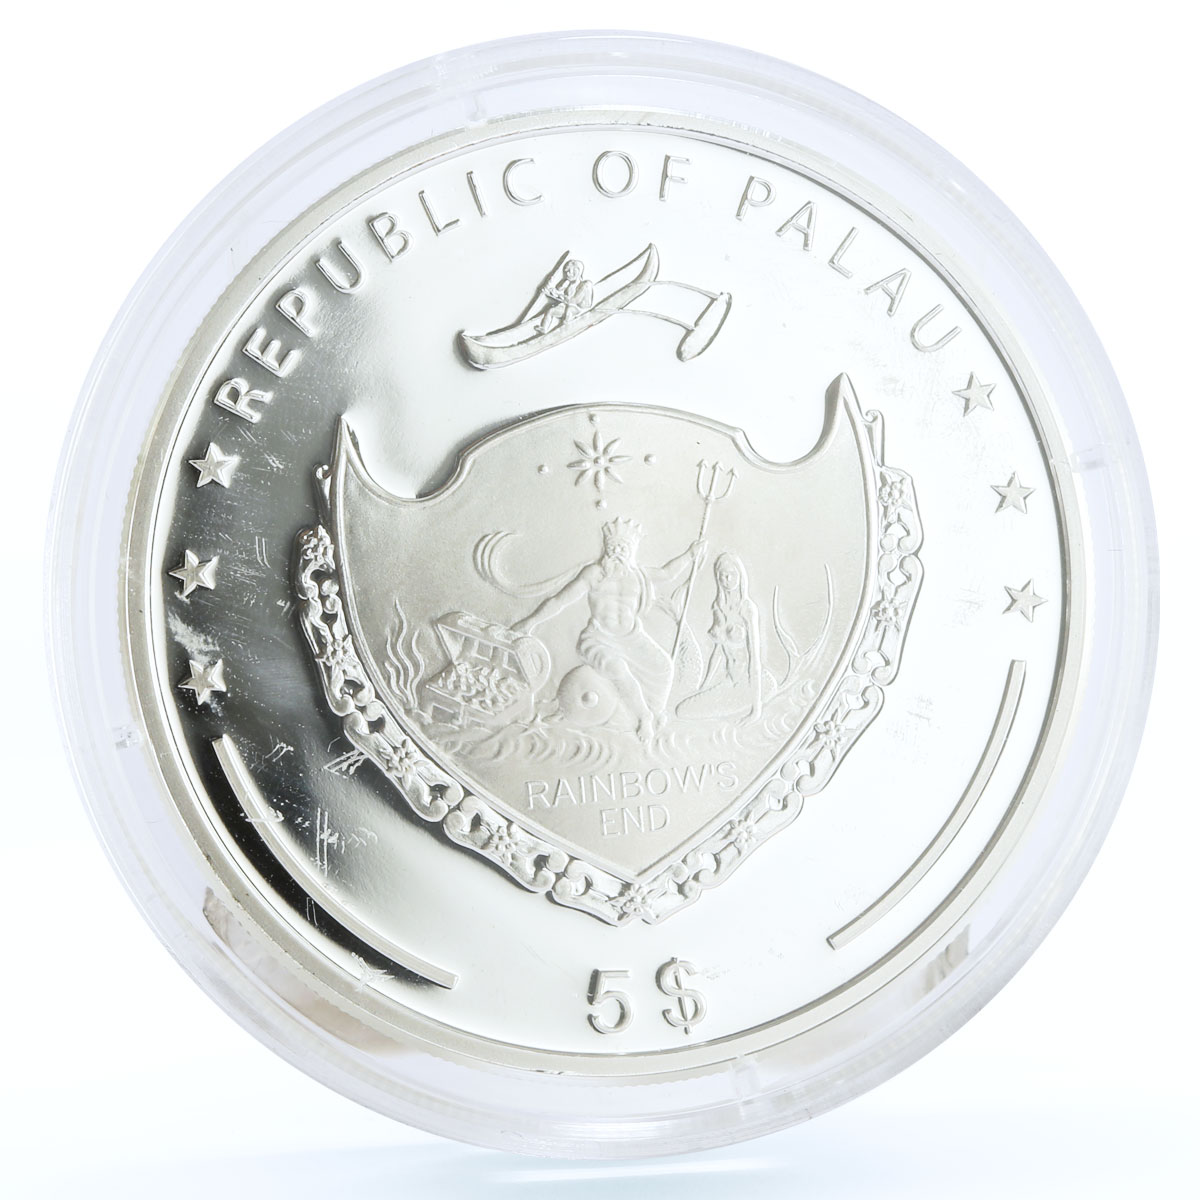 Palau 5 dollars Marine Life Protection Pinctada Maxima Shell silver coin 2007